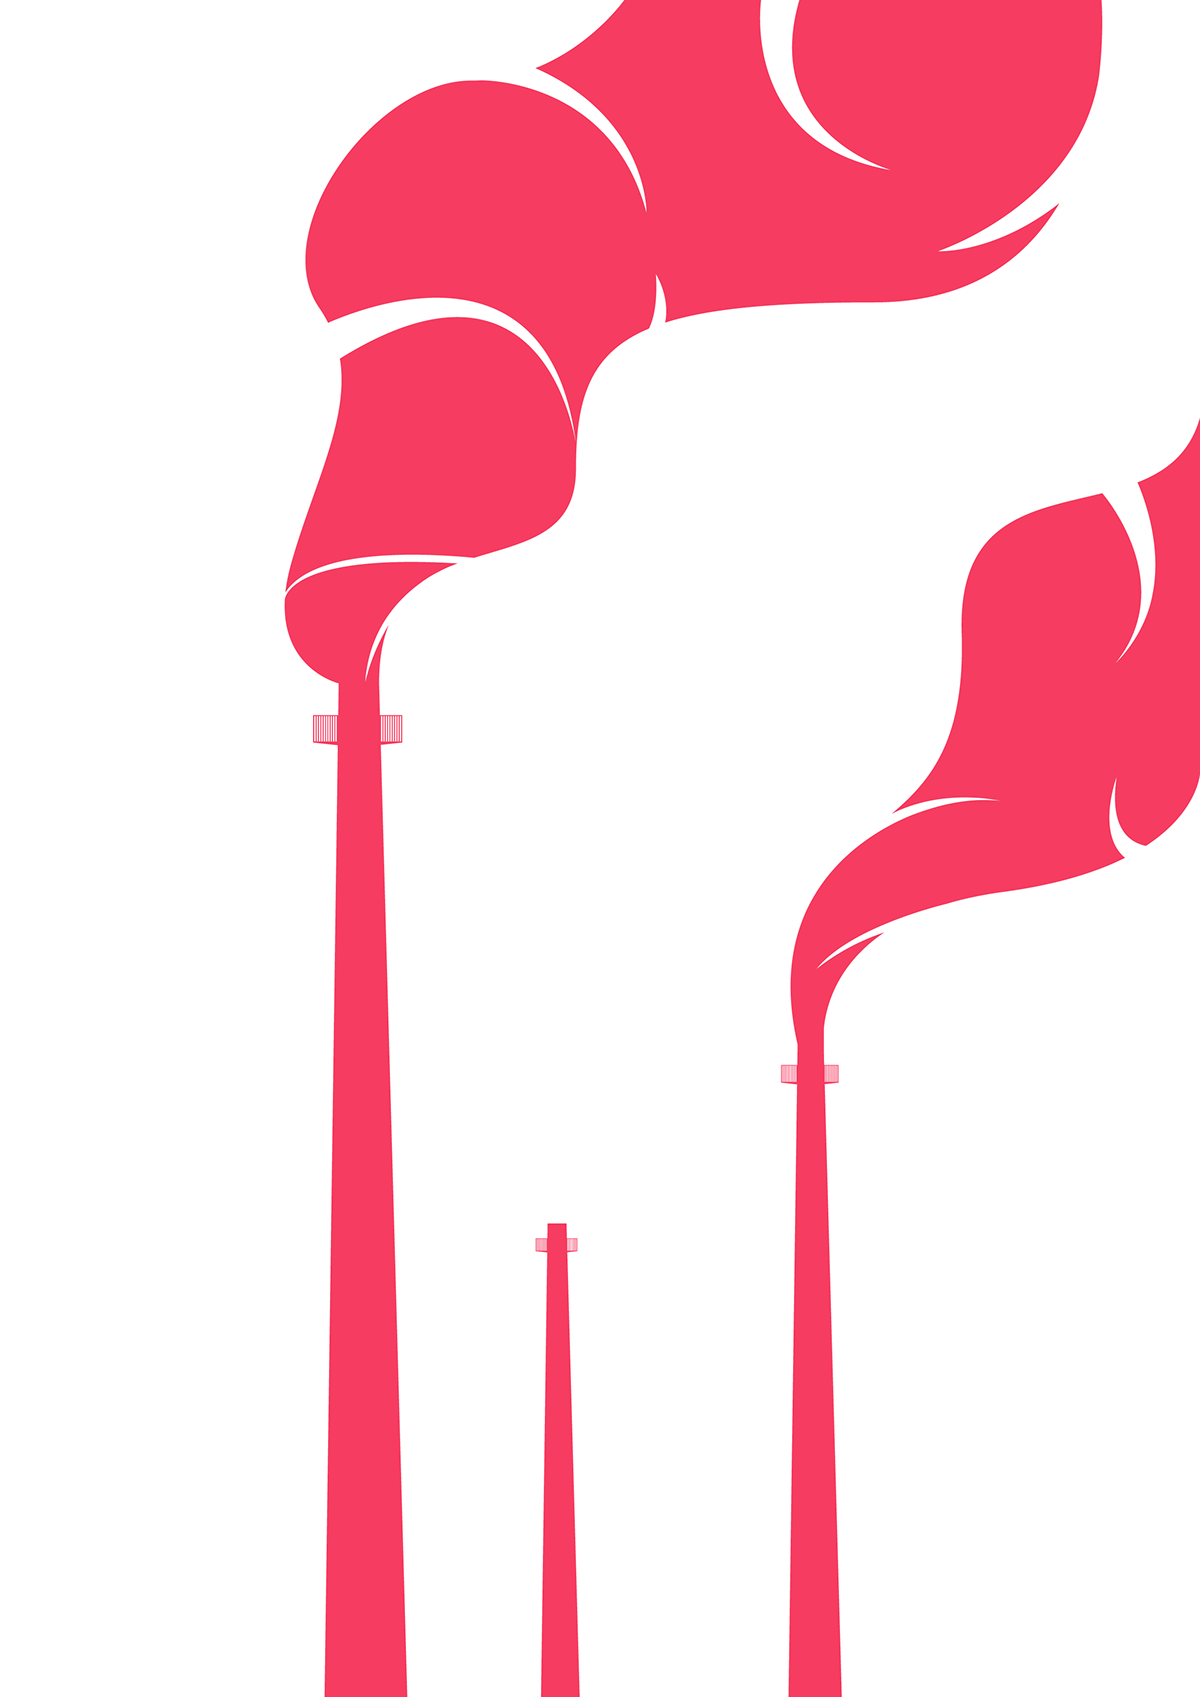 Illustrator Digital Art  heating plant smoke